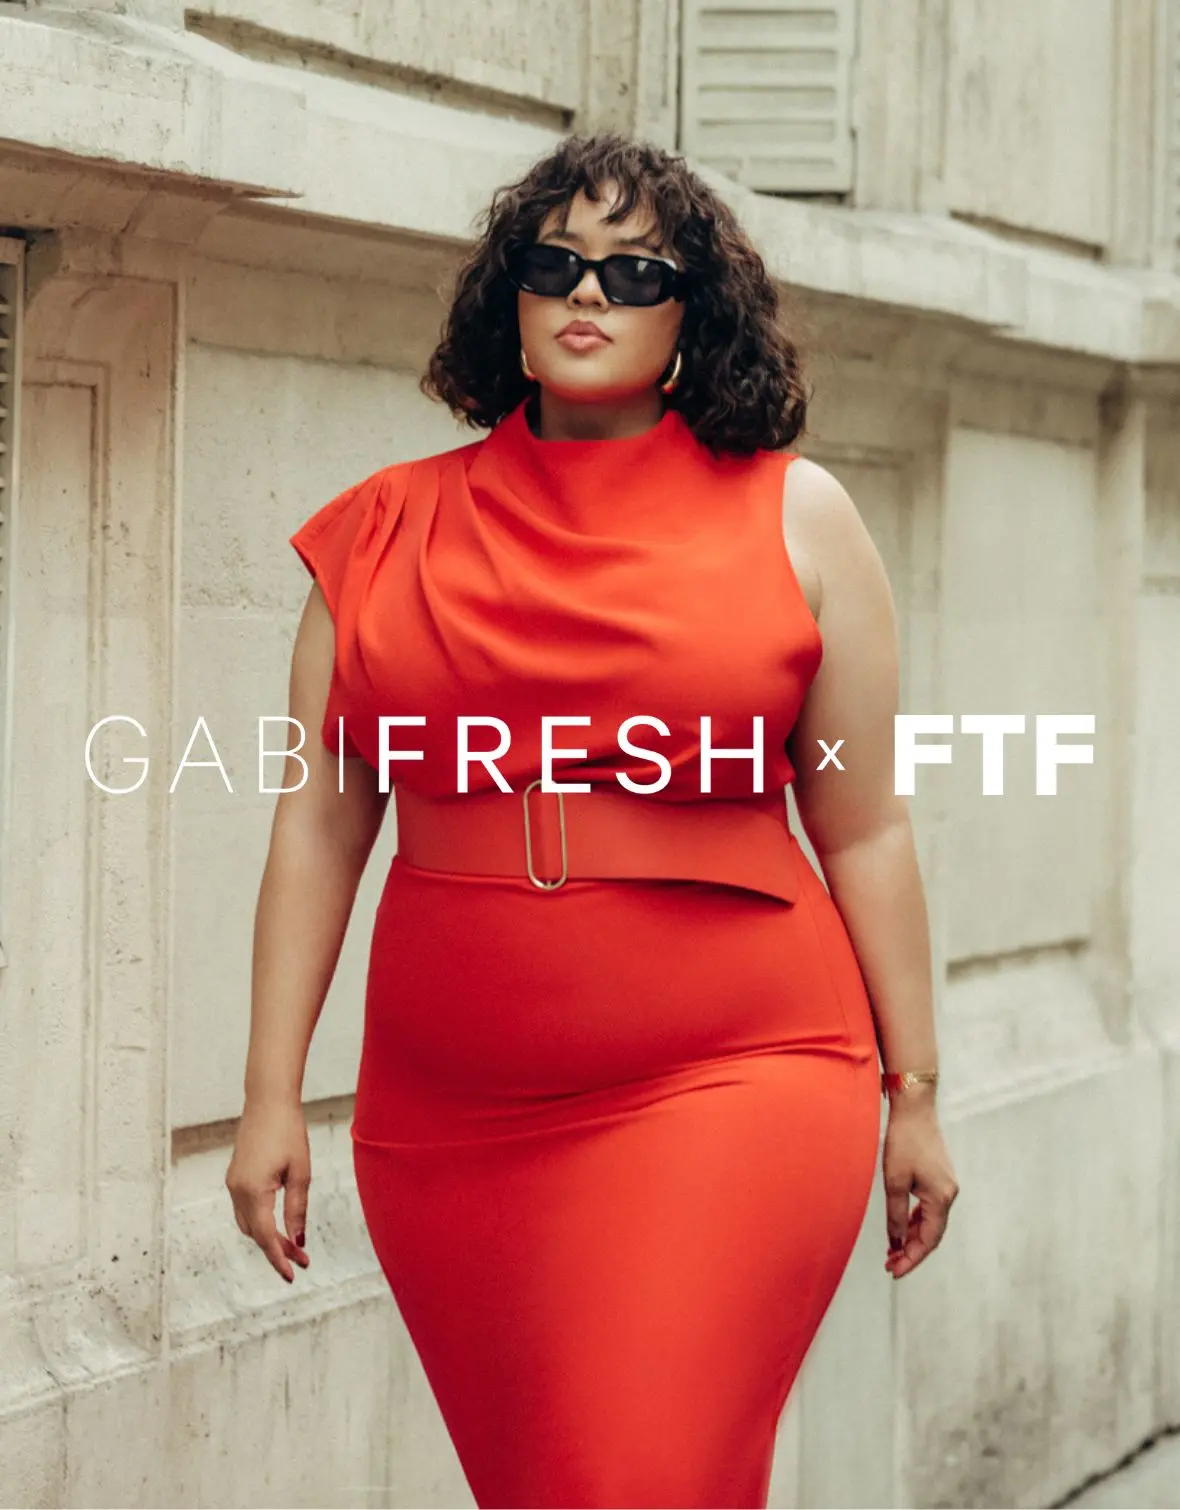 Fashion To Figure x Gabi Fresh - Featuring a Red Plus Size Dress